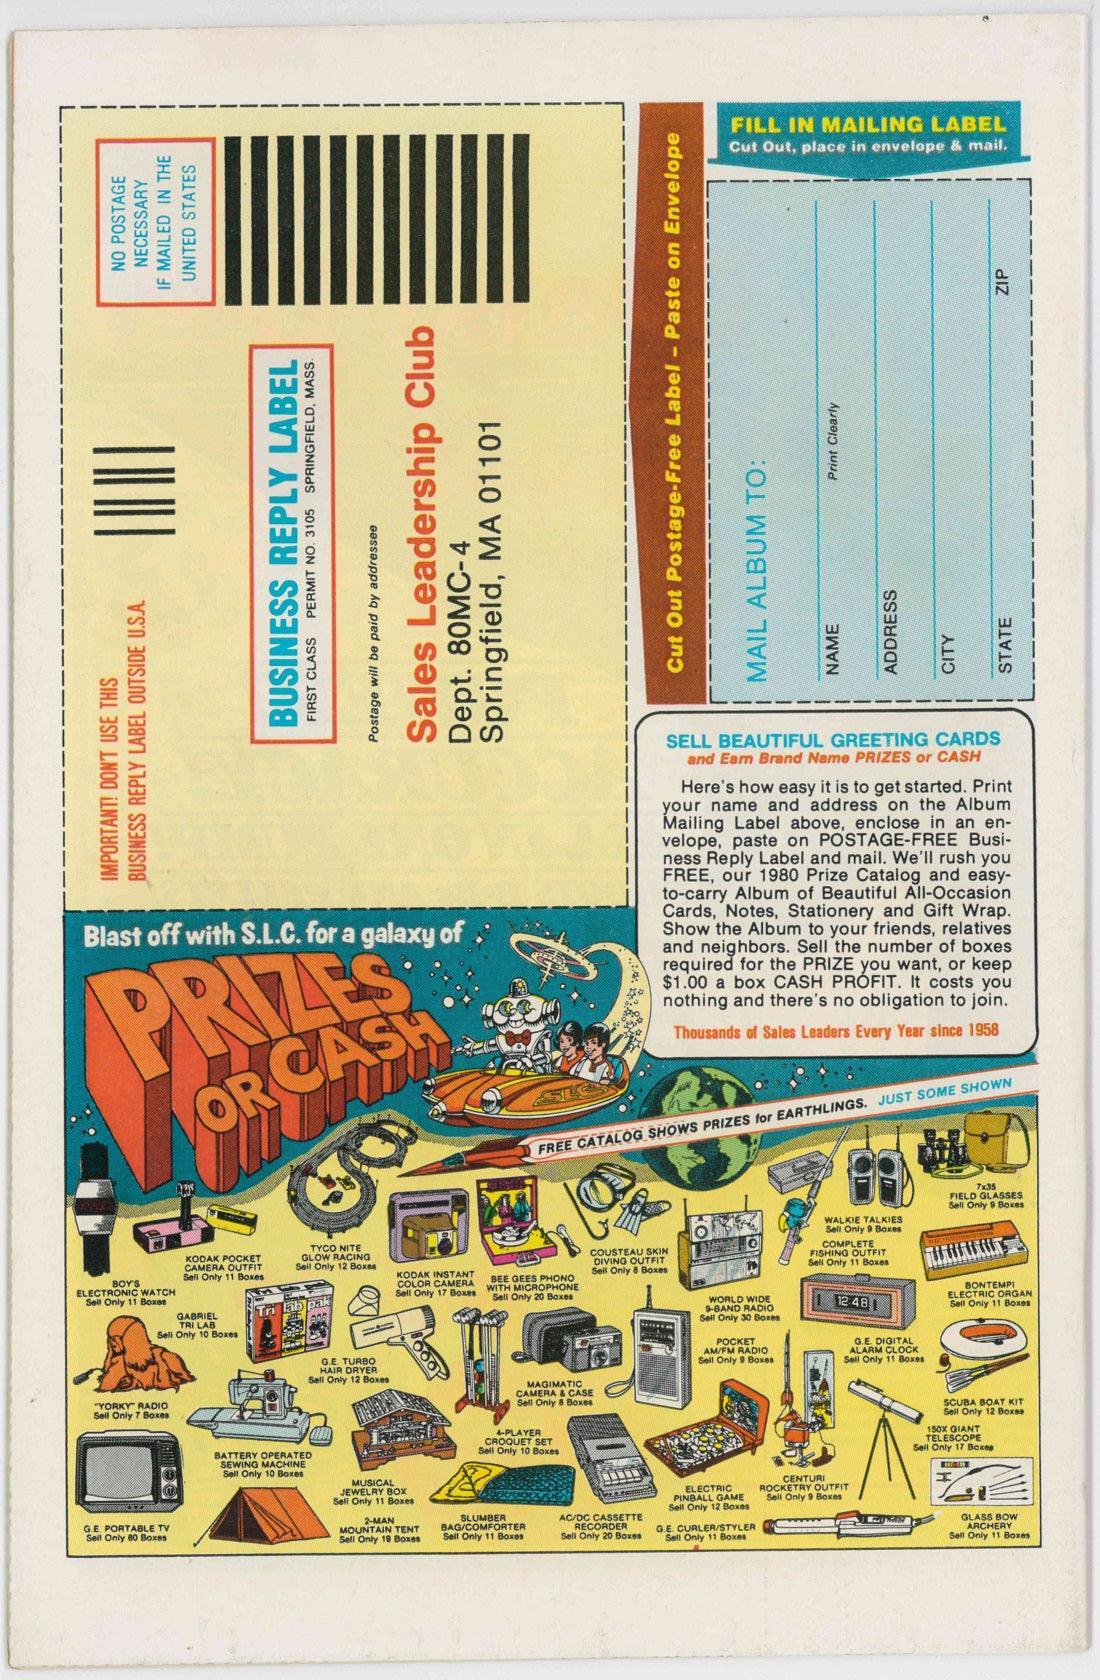 UNCANNY X-MEN (1963) #135 (VF/NM) NEWSSTAND - Kings Comics